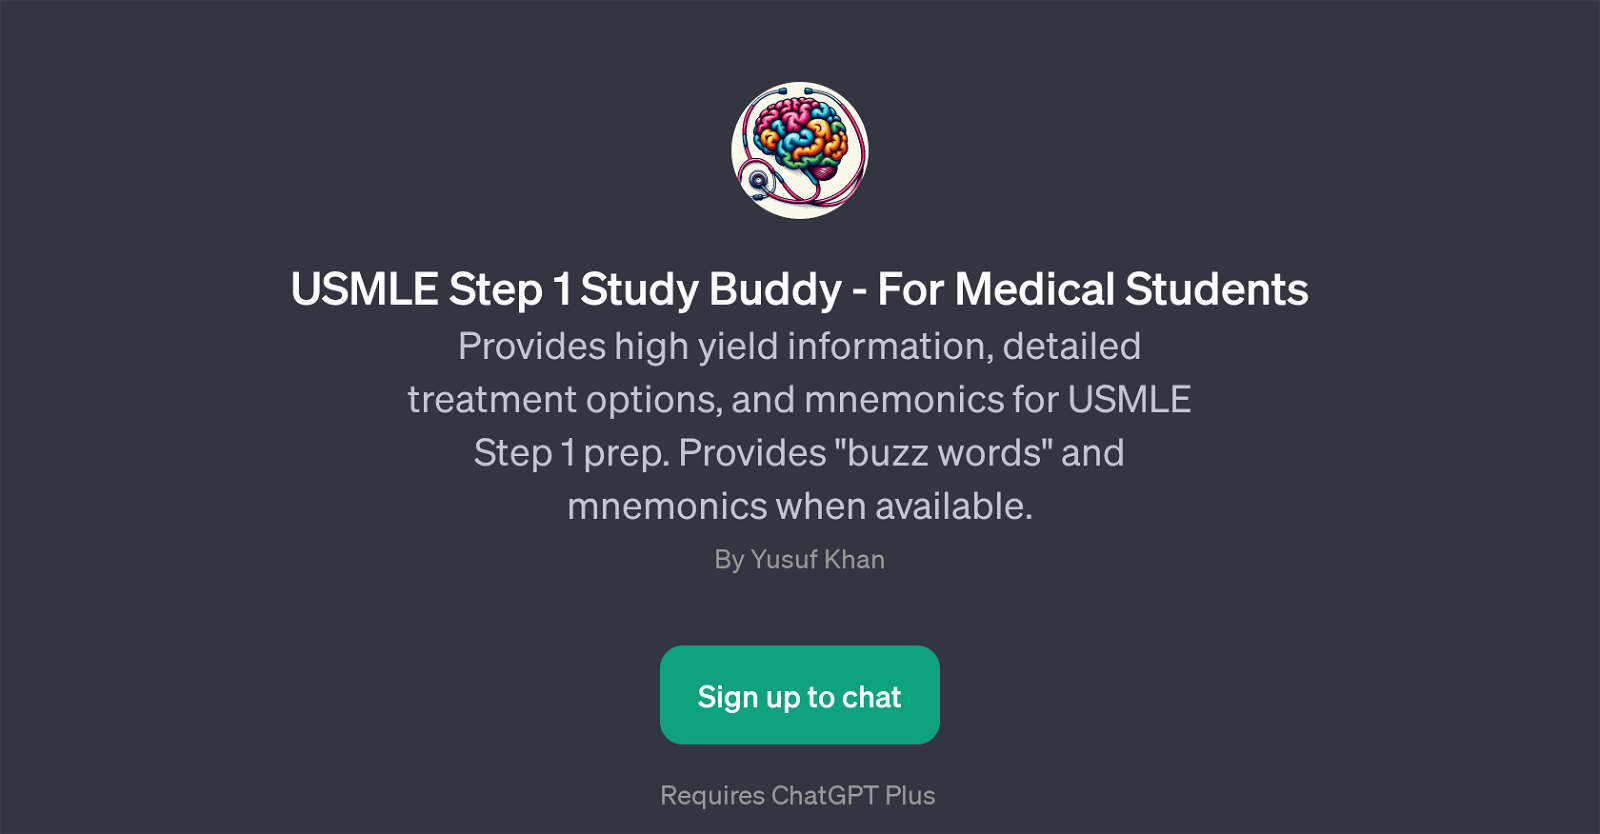 USMLE Step 1 Study Buddy - For Medical Students website